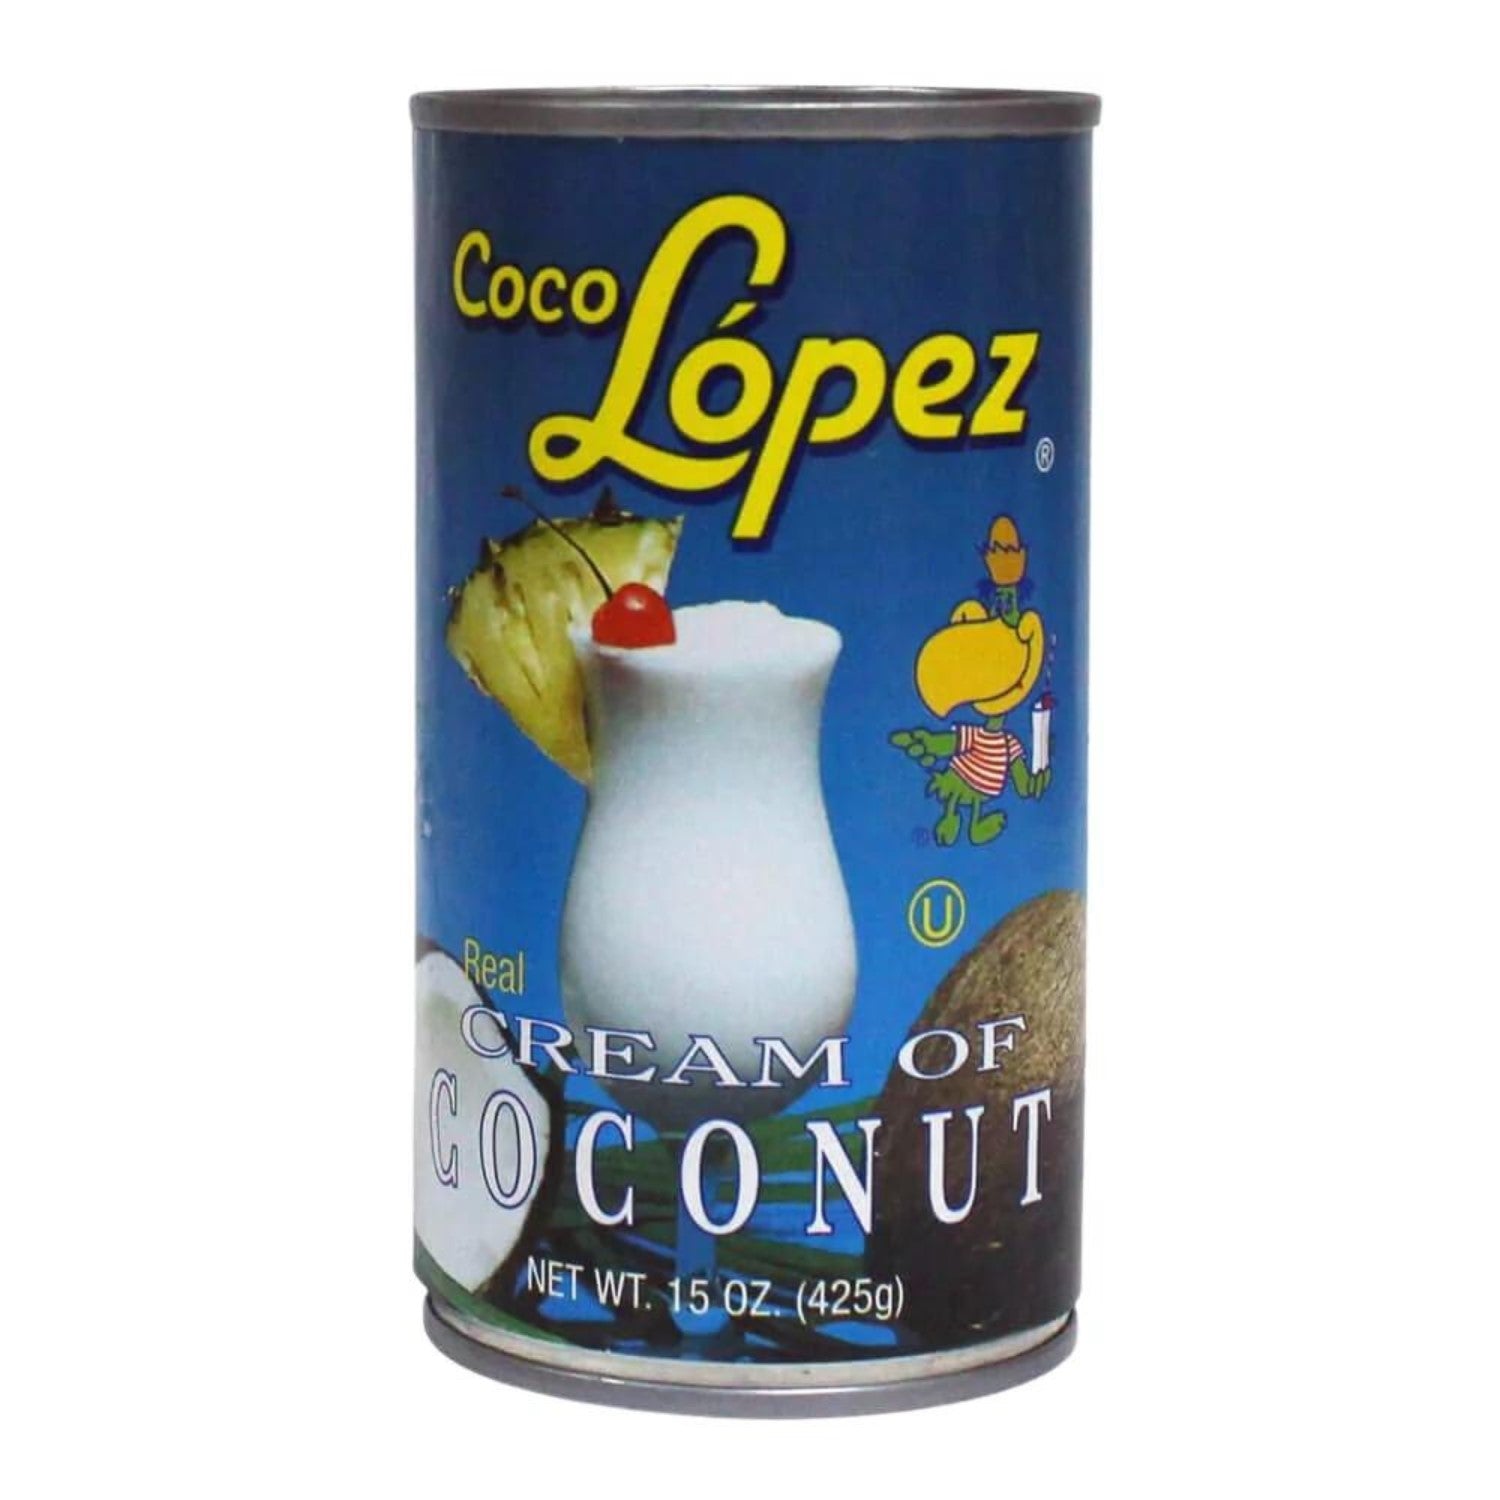 Coco Lopez Cream Of Coconut 425G - 12 Pack